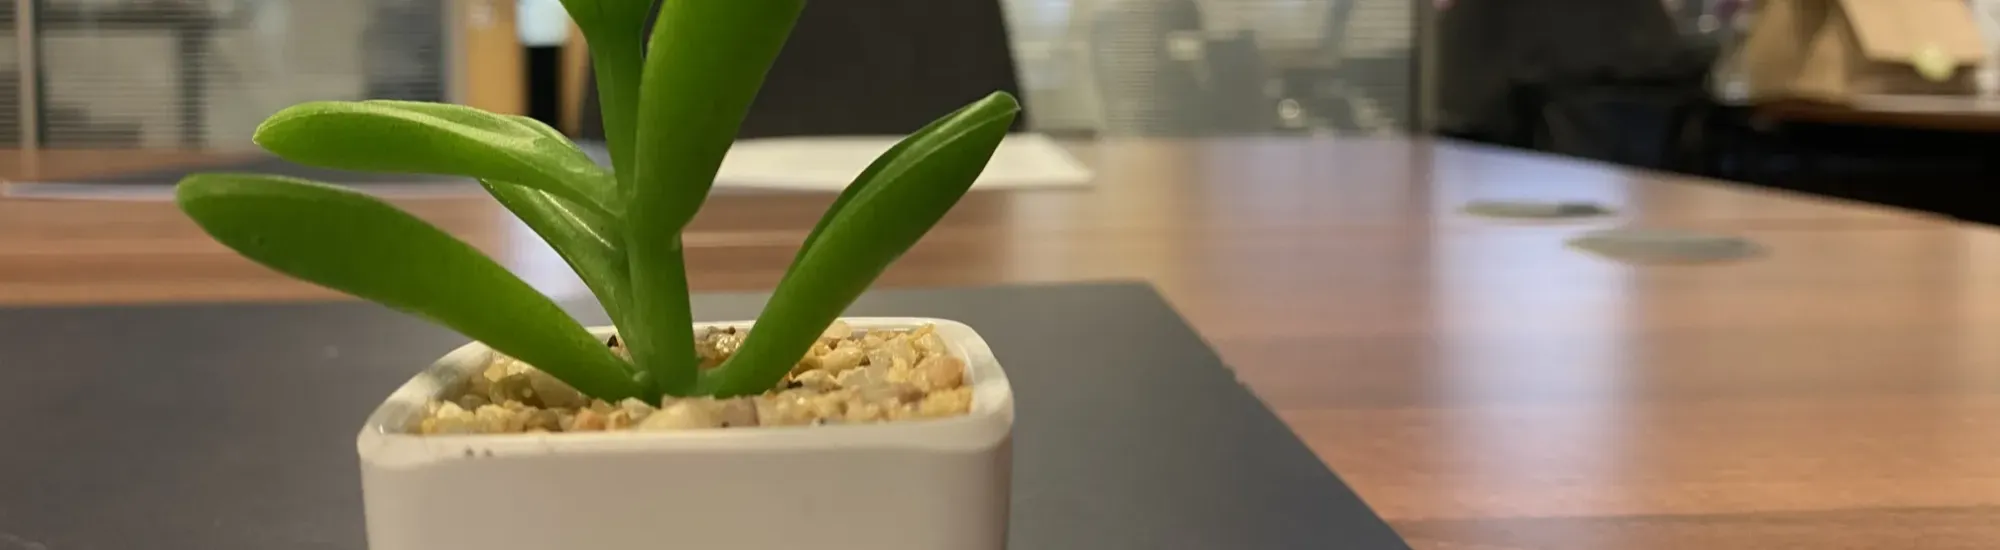 Green plant on desk